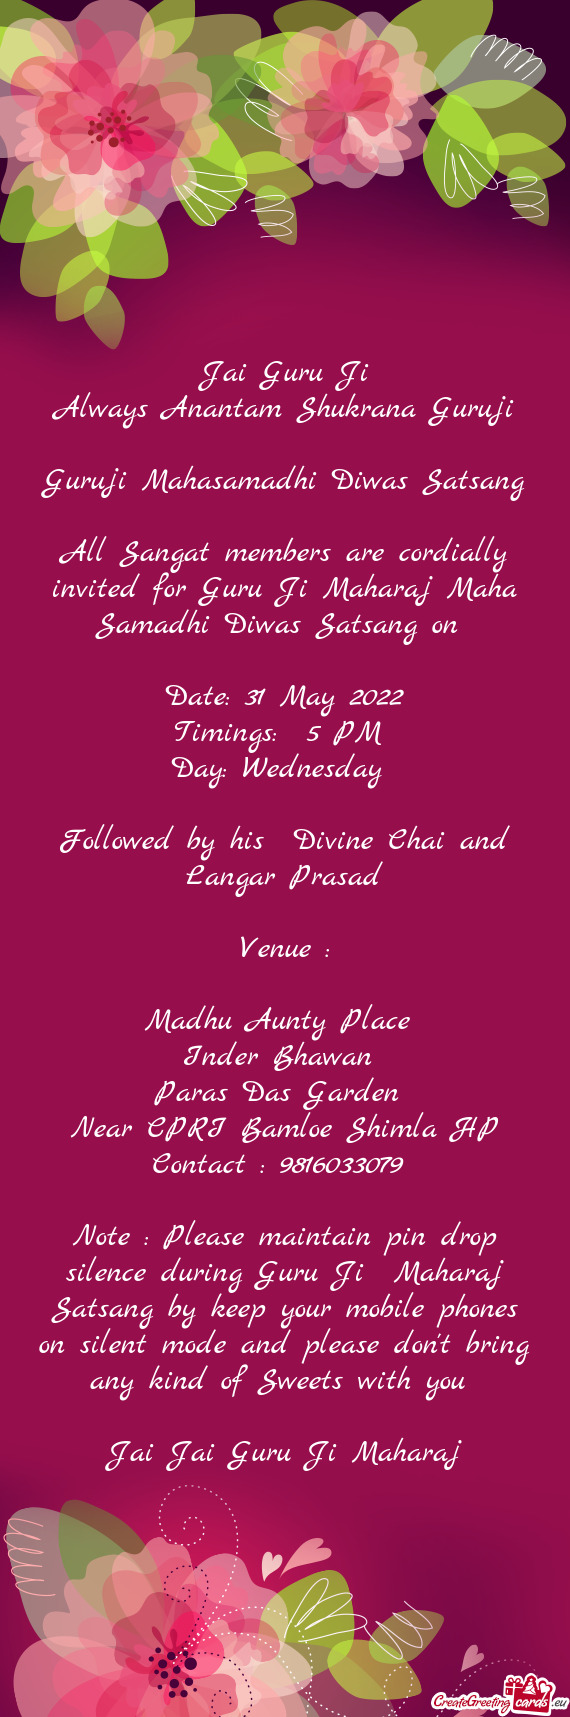 All Sangat members are cordially invited for Guru Ji Maharaj Maha Samadhi Diwas Satsang on